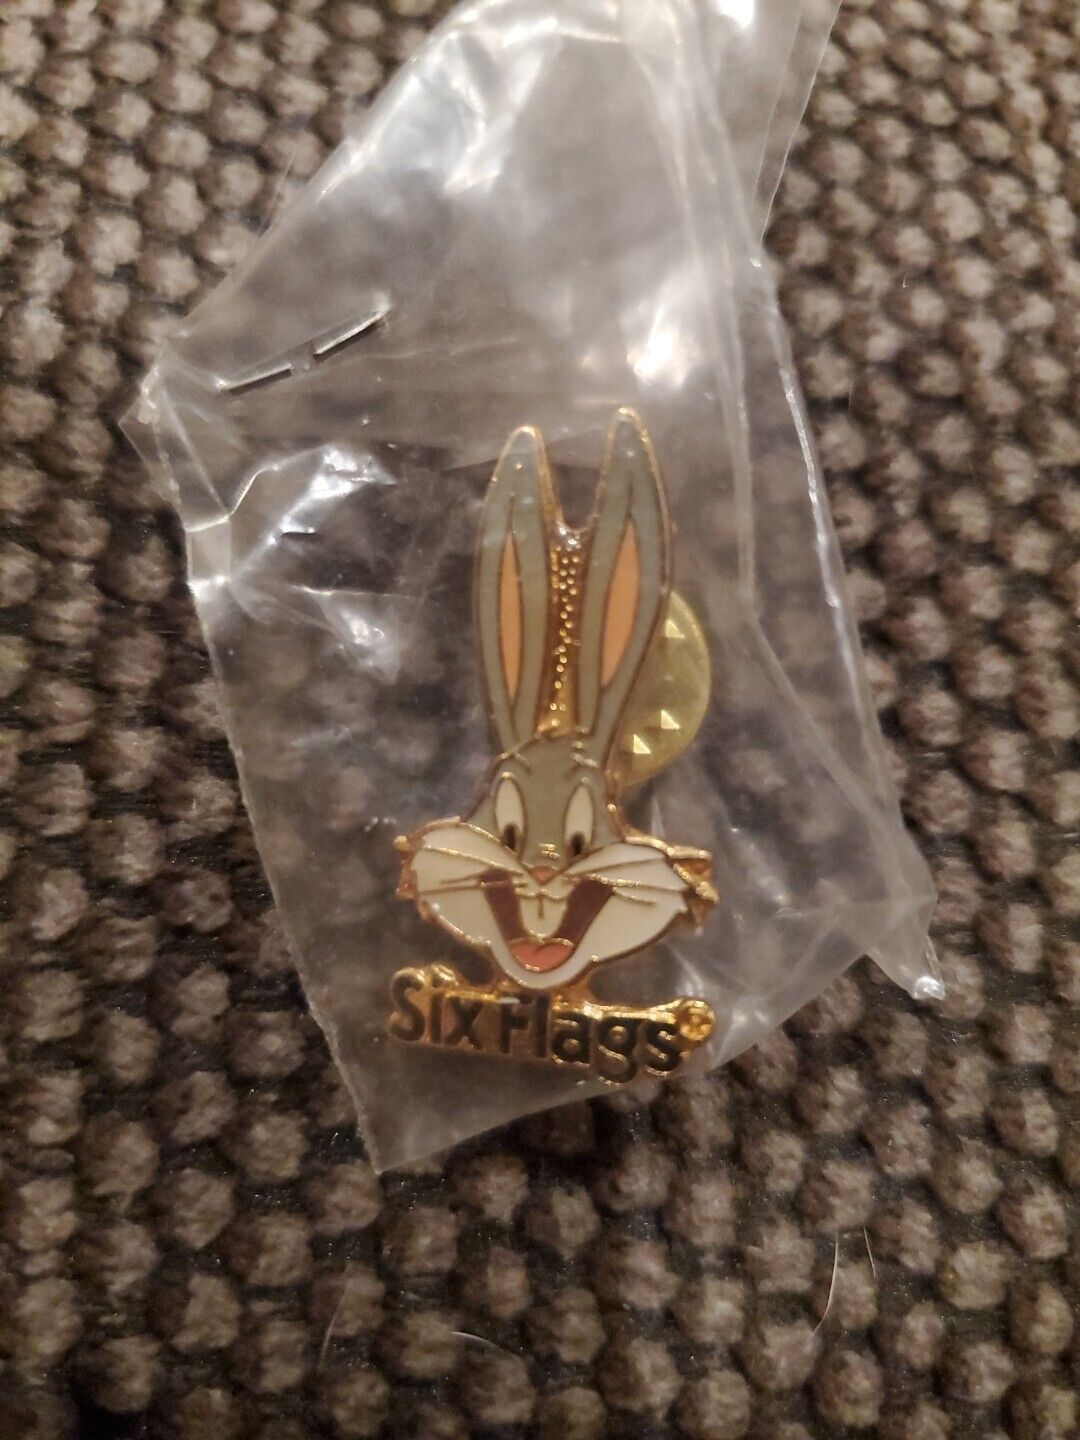 Vintage 1993 Six Flags Bugs Bunny Lapel Pin Souvenir Theme Park Looney Tunes